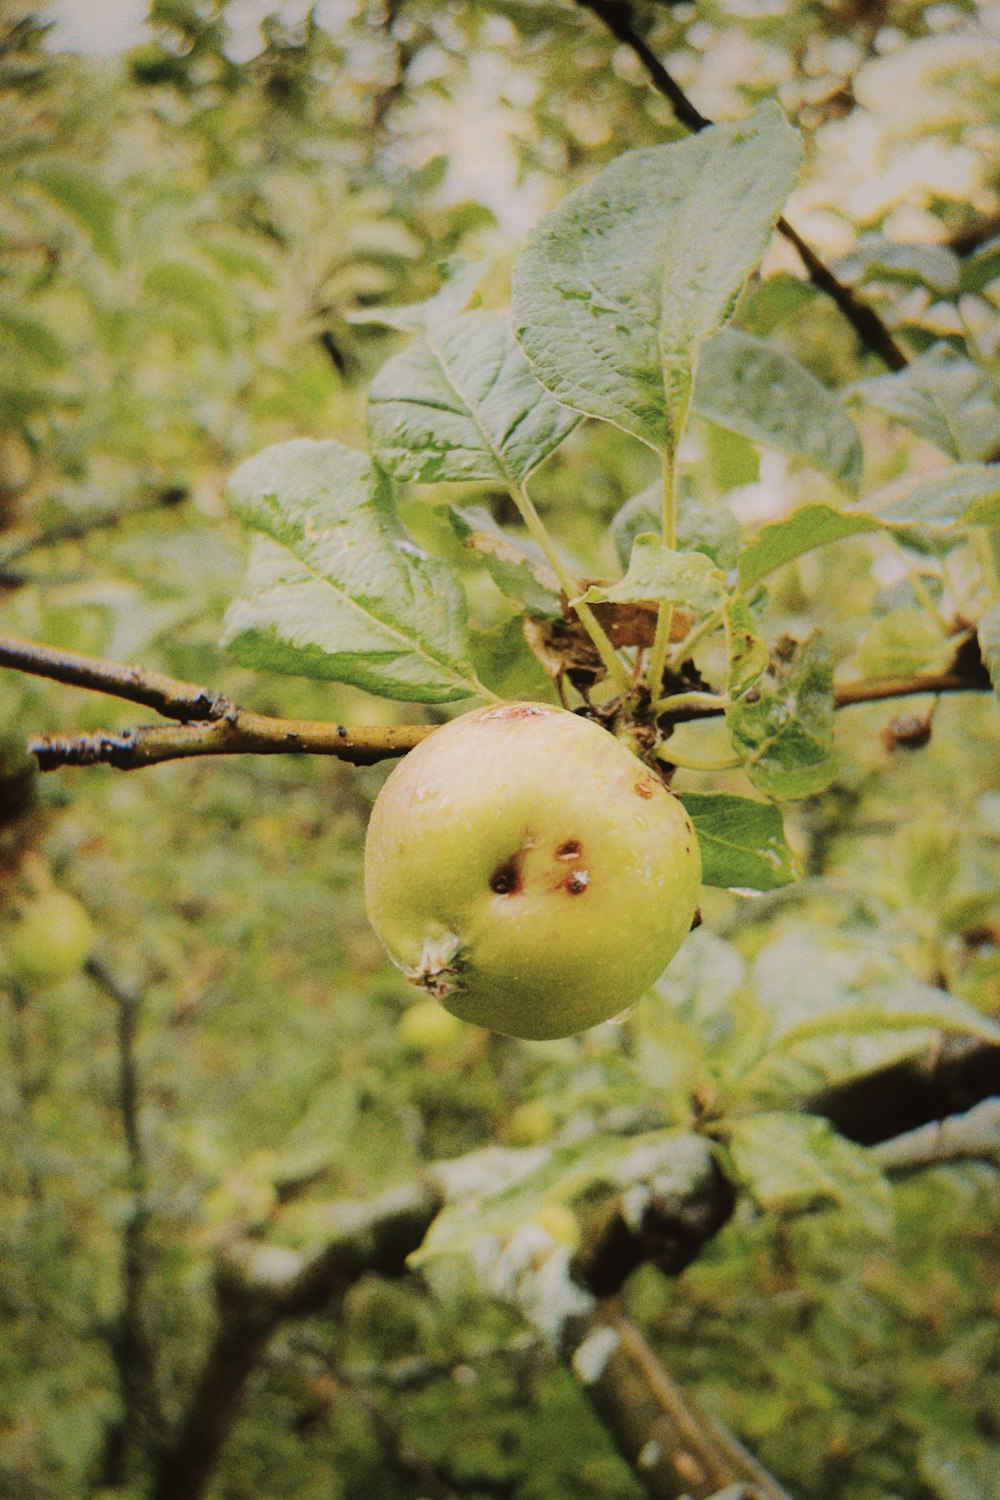 green apple fruit on tree branch